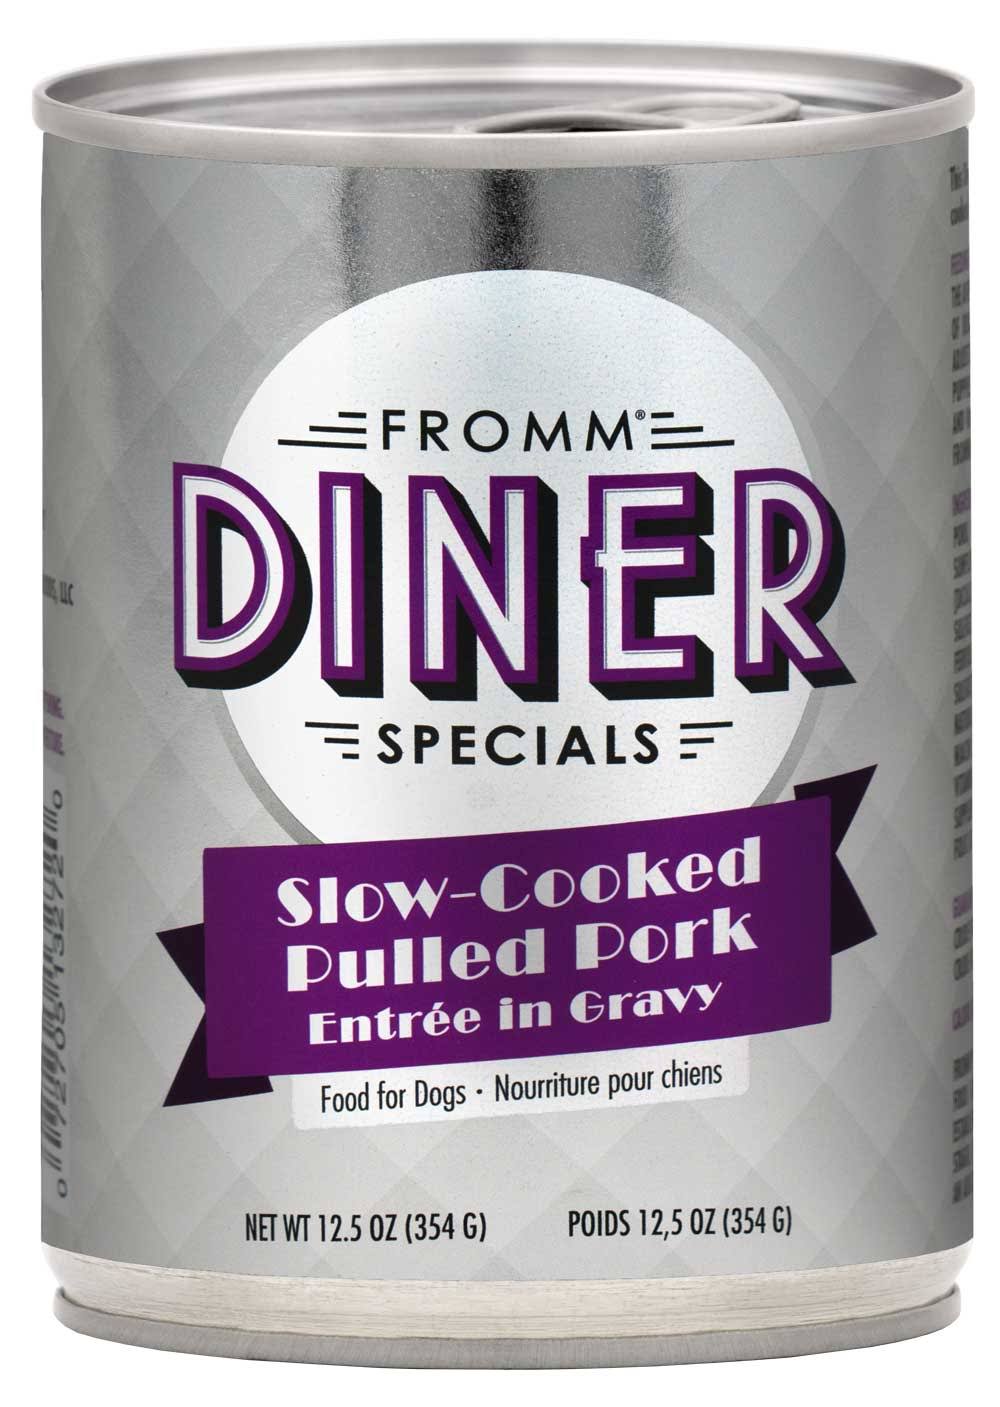 Fromm Diner Specials Slow-Cooked Pulled Pork Entrée in Gravy 12/12.5 oz